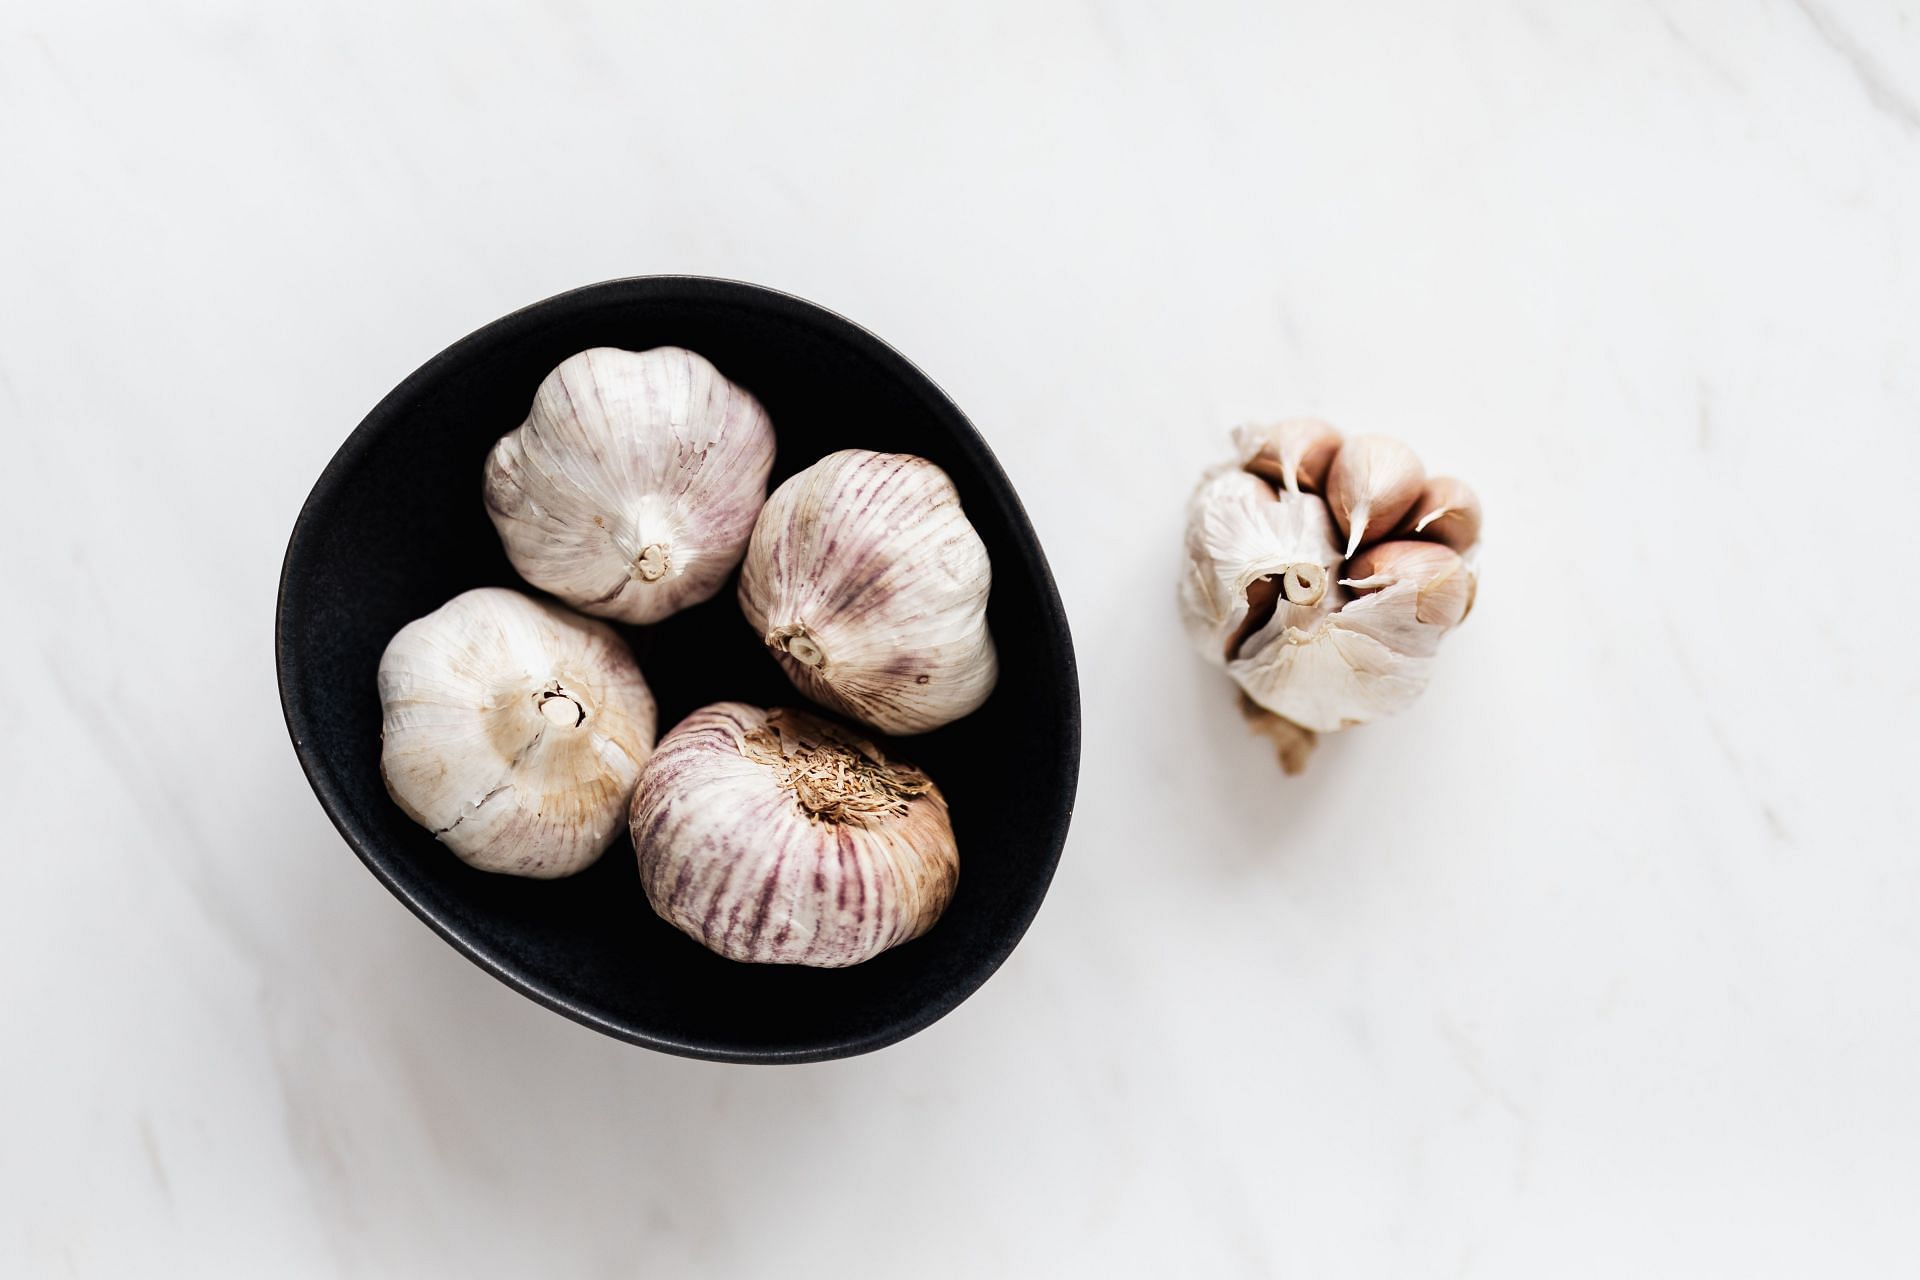 Benefits of black garlic- It is good for heart health. (Image via Pexels/ Karolina Grabowska)